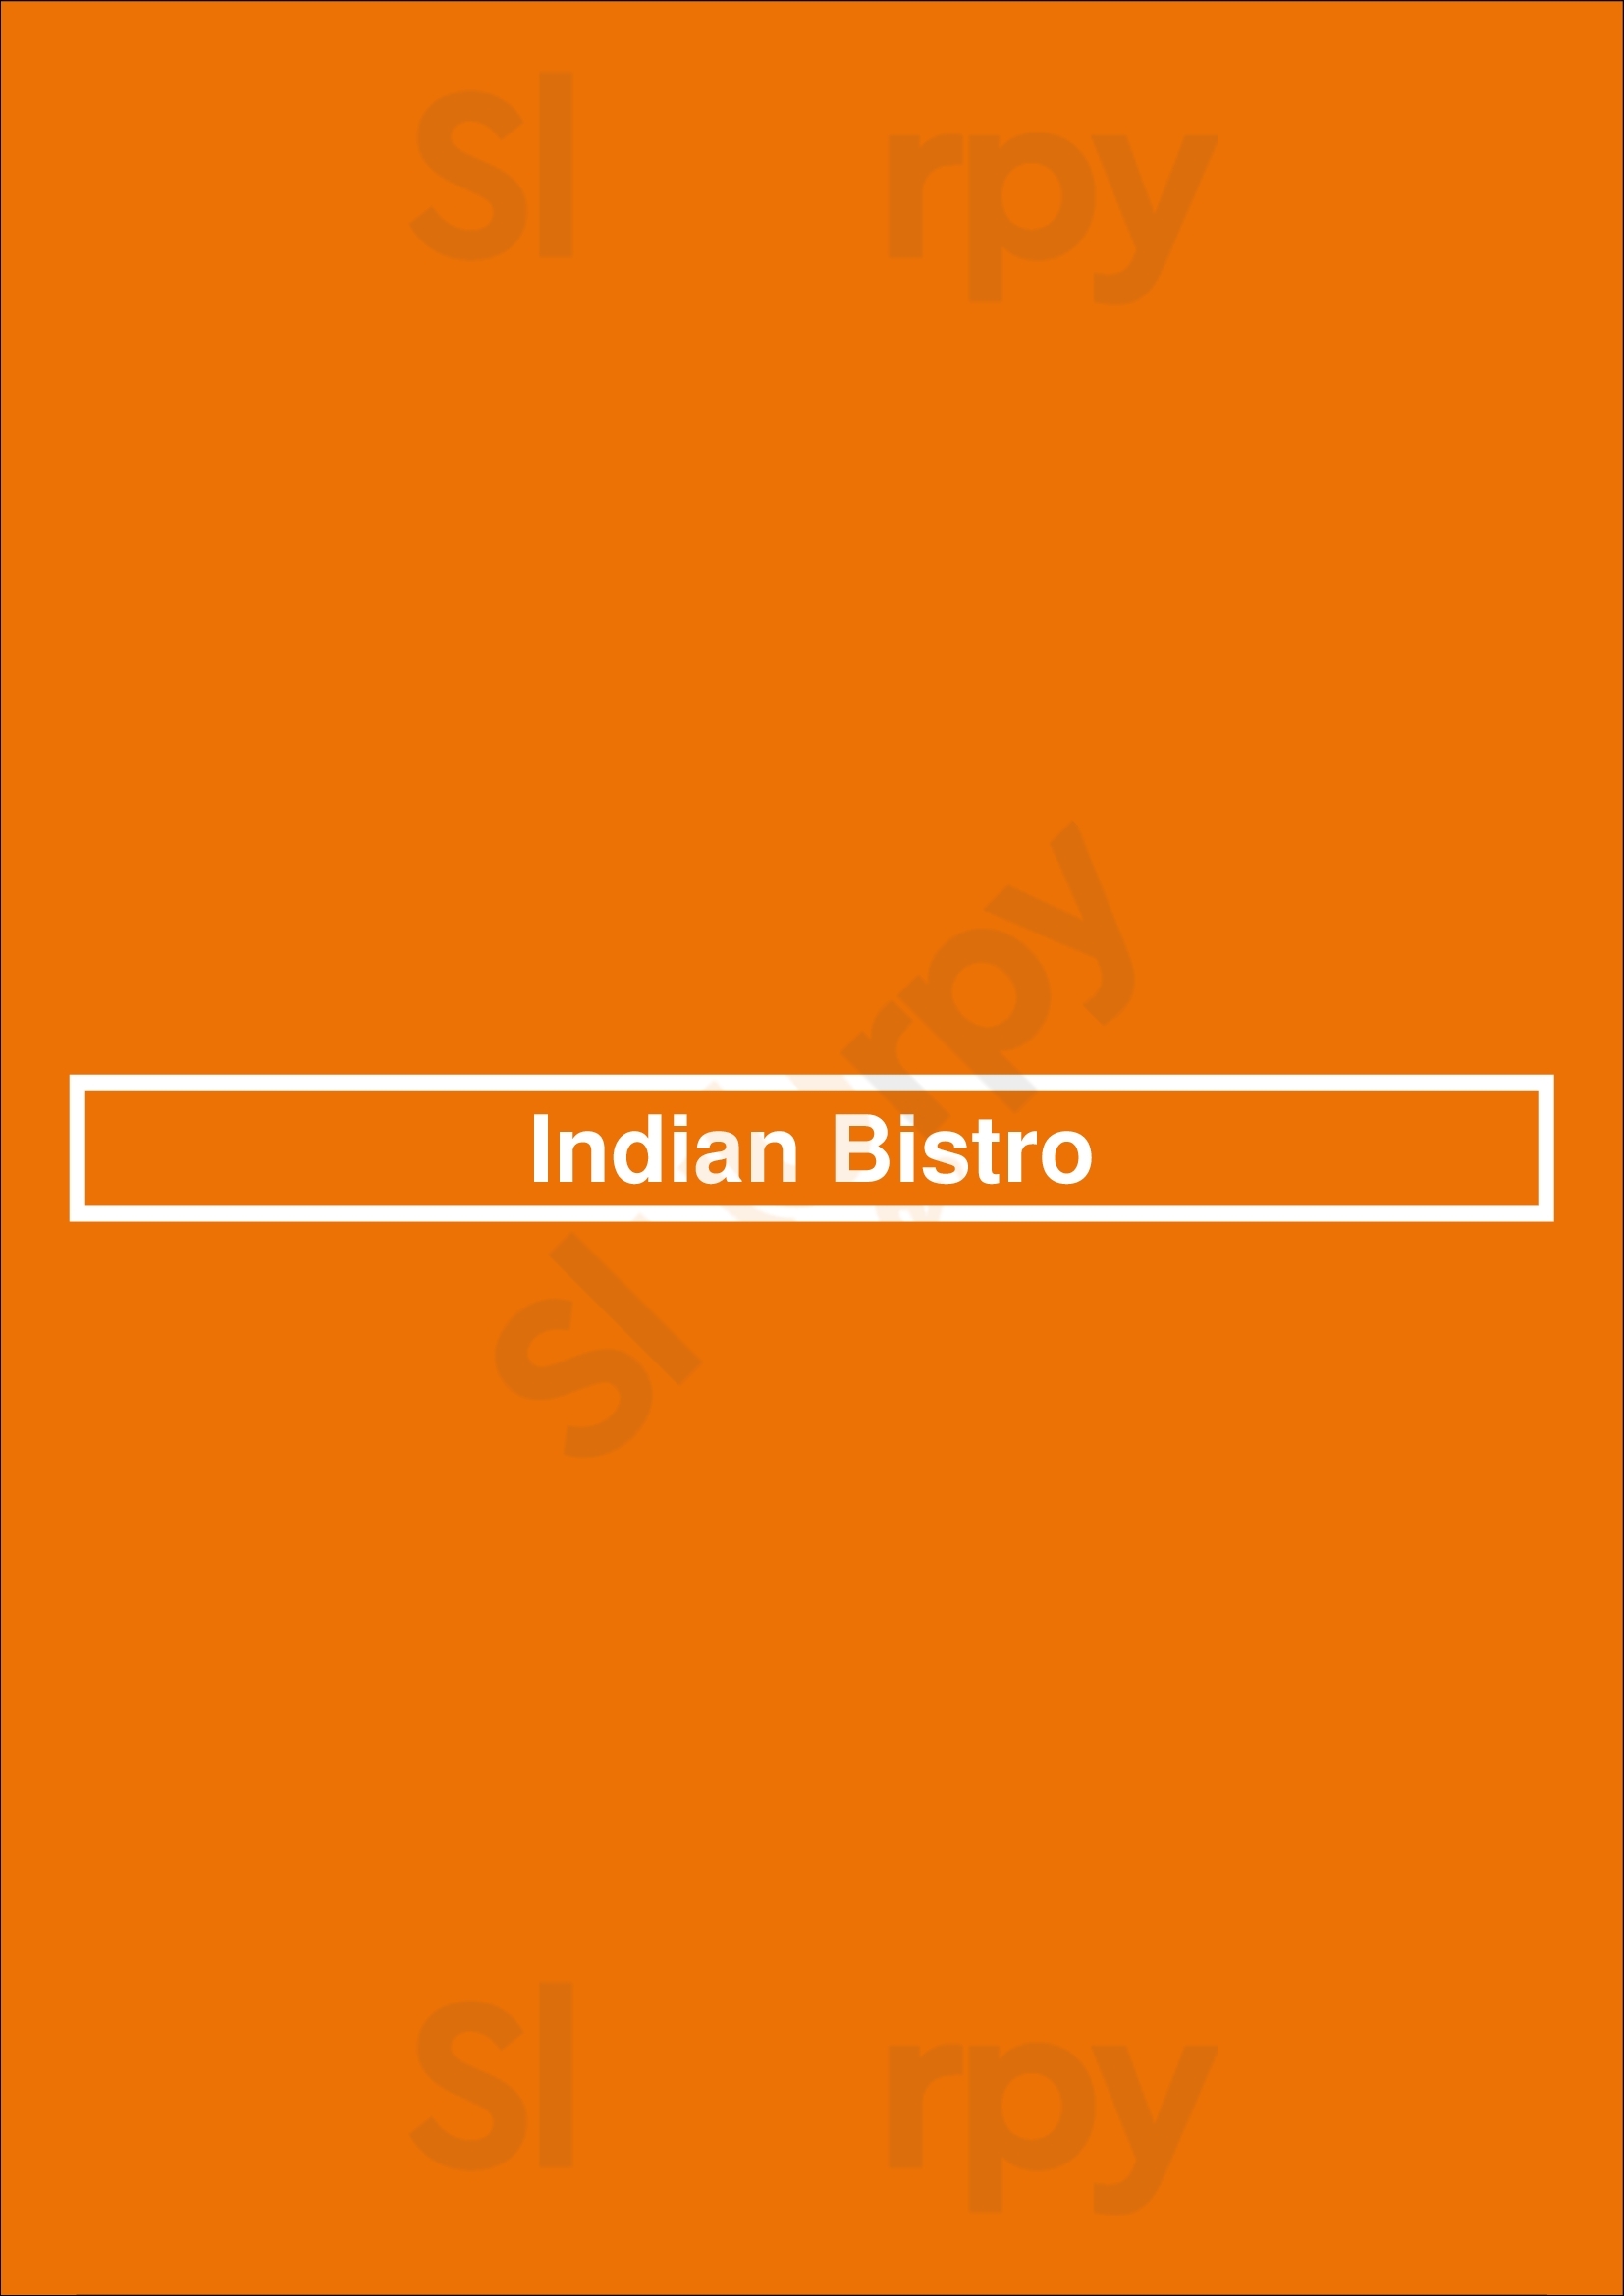 Indian Bistro Cincinnati Menu - 1